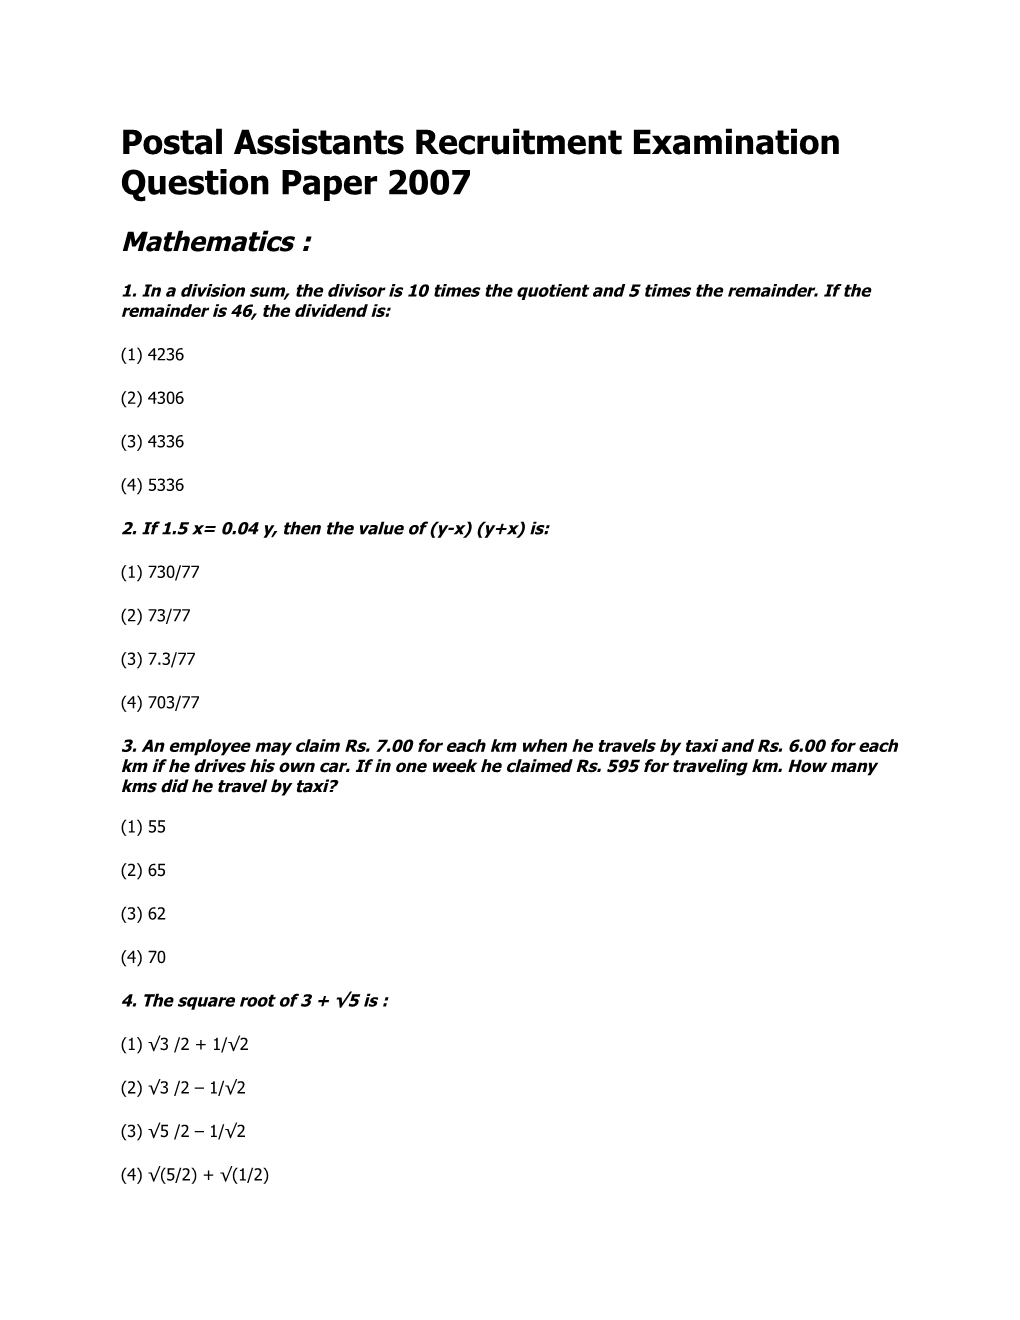 Postal Assistants Recruitment Examination Question Paper 2007